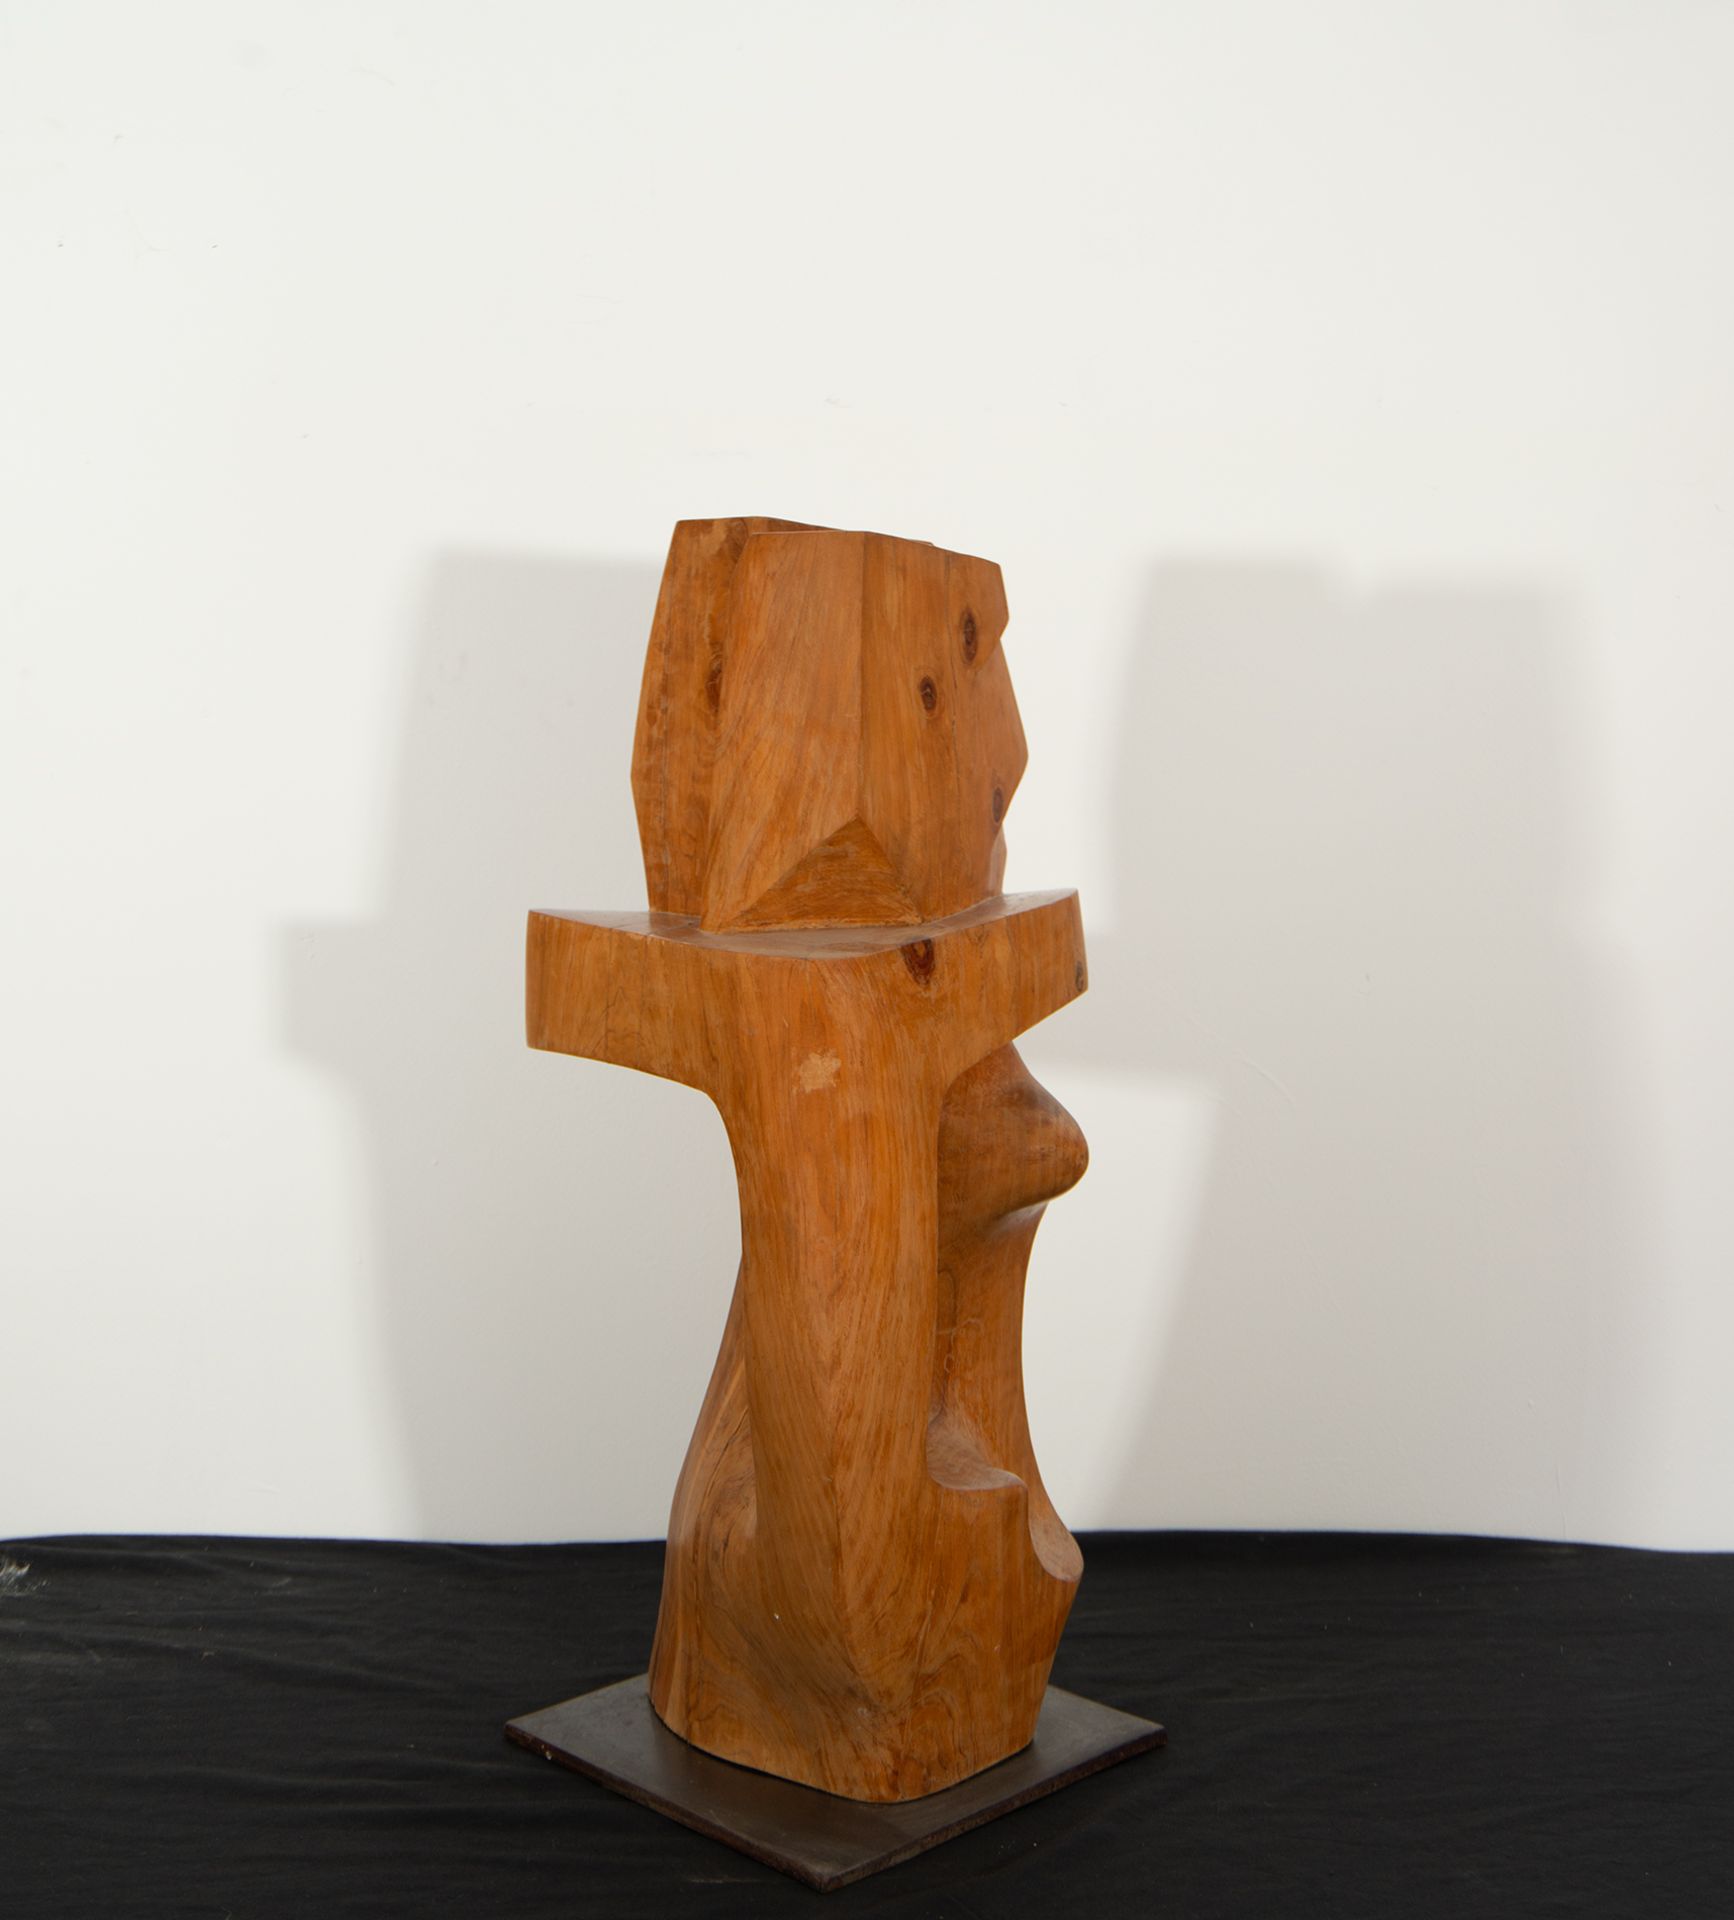 Wood Sculpture, Manuel Amaro (Córdoba, 1950) - Image 4 of 5